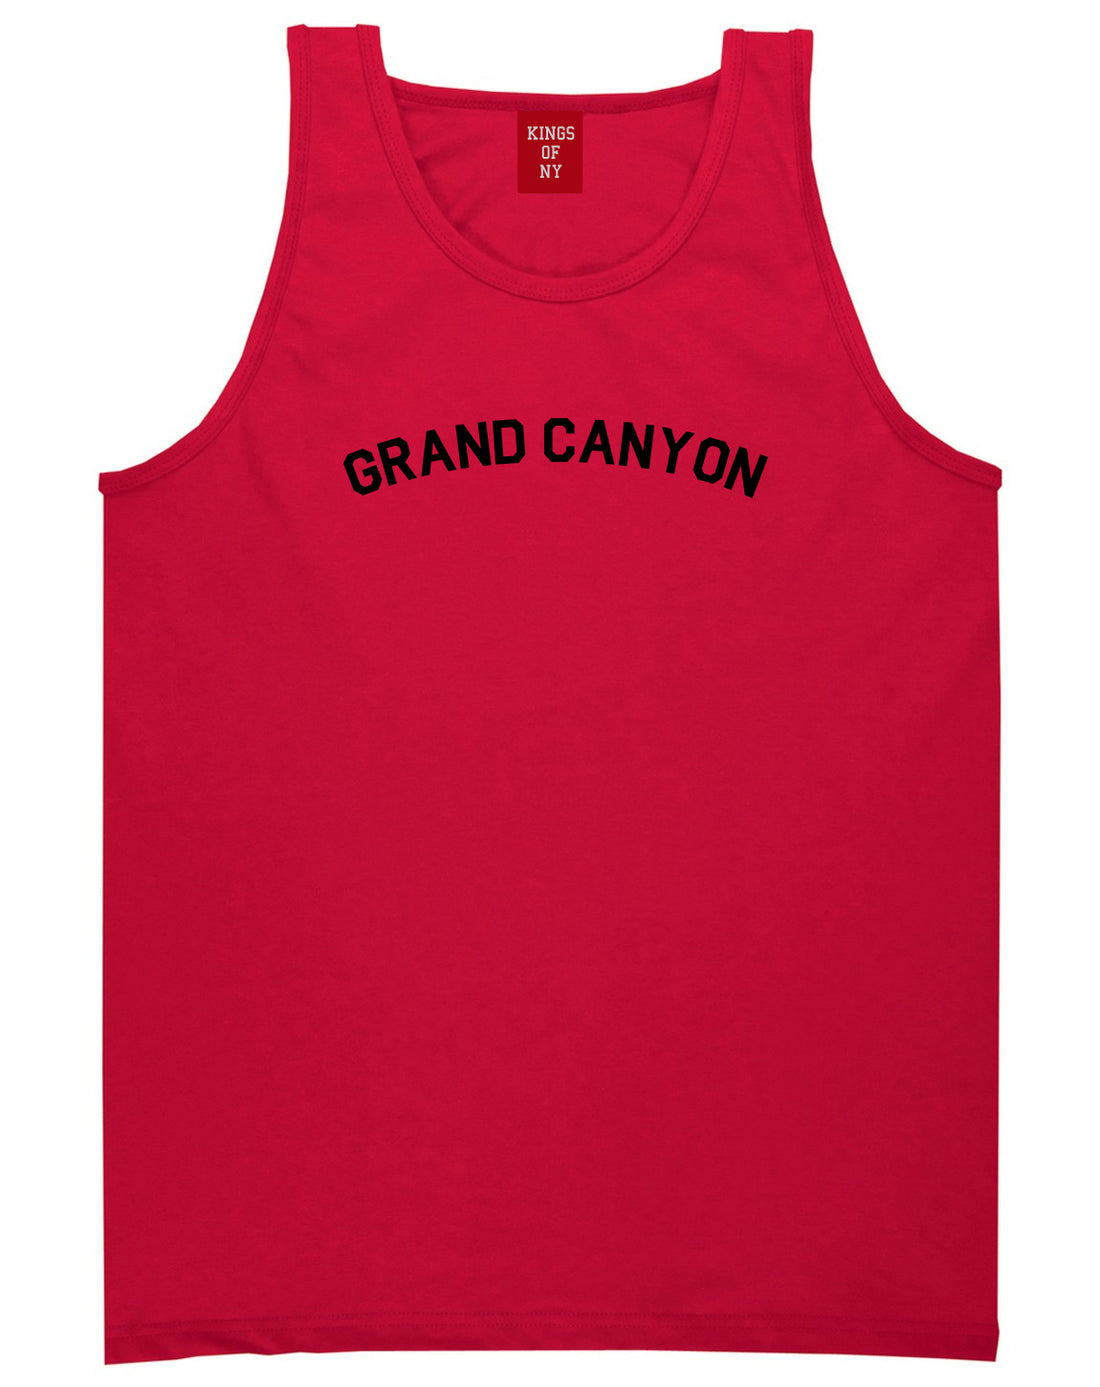 Grand Canyon Mens Red Tank Top Shirt by KINGS OF NY